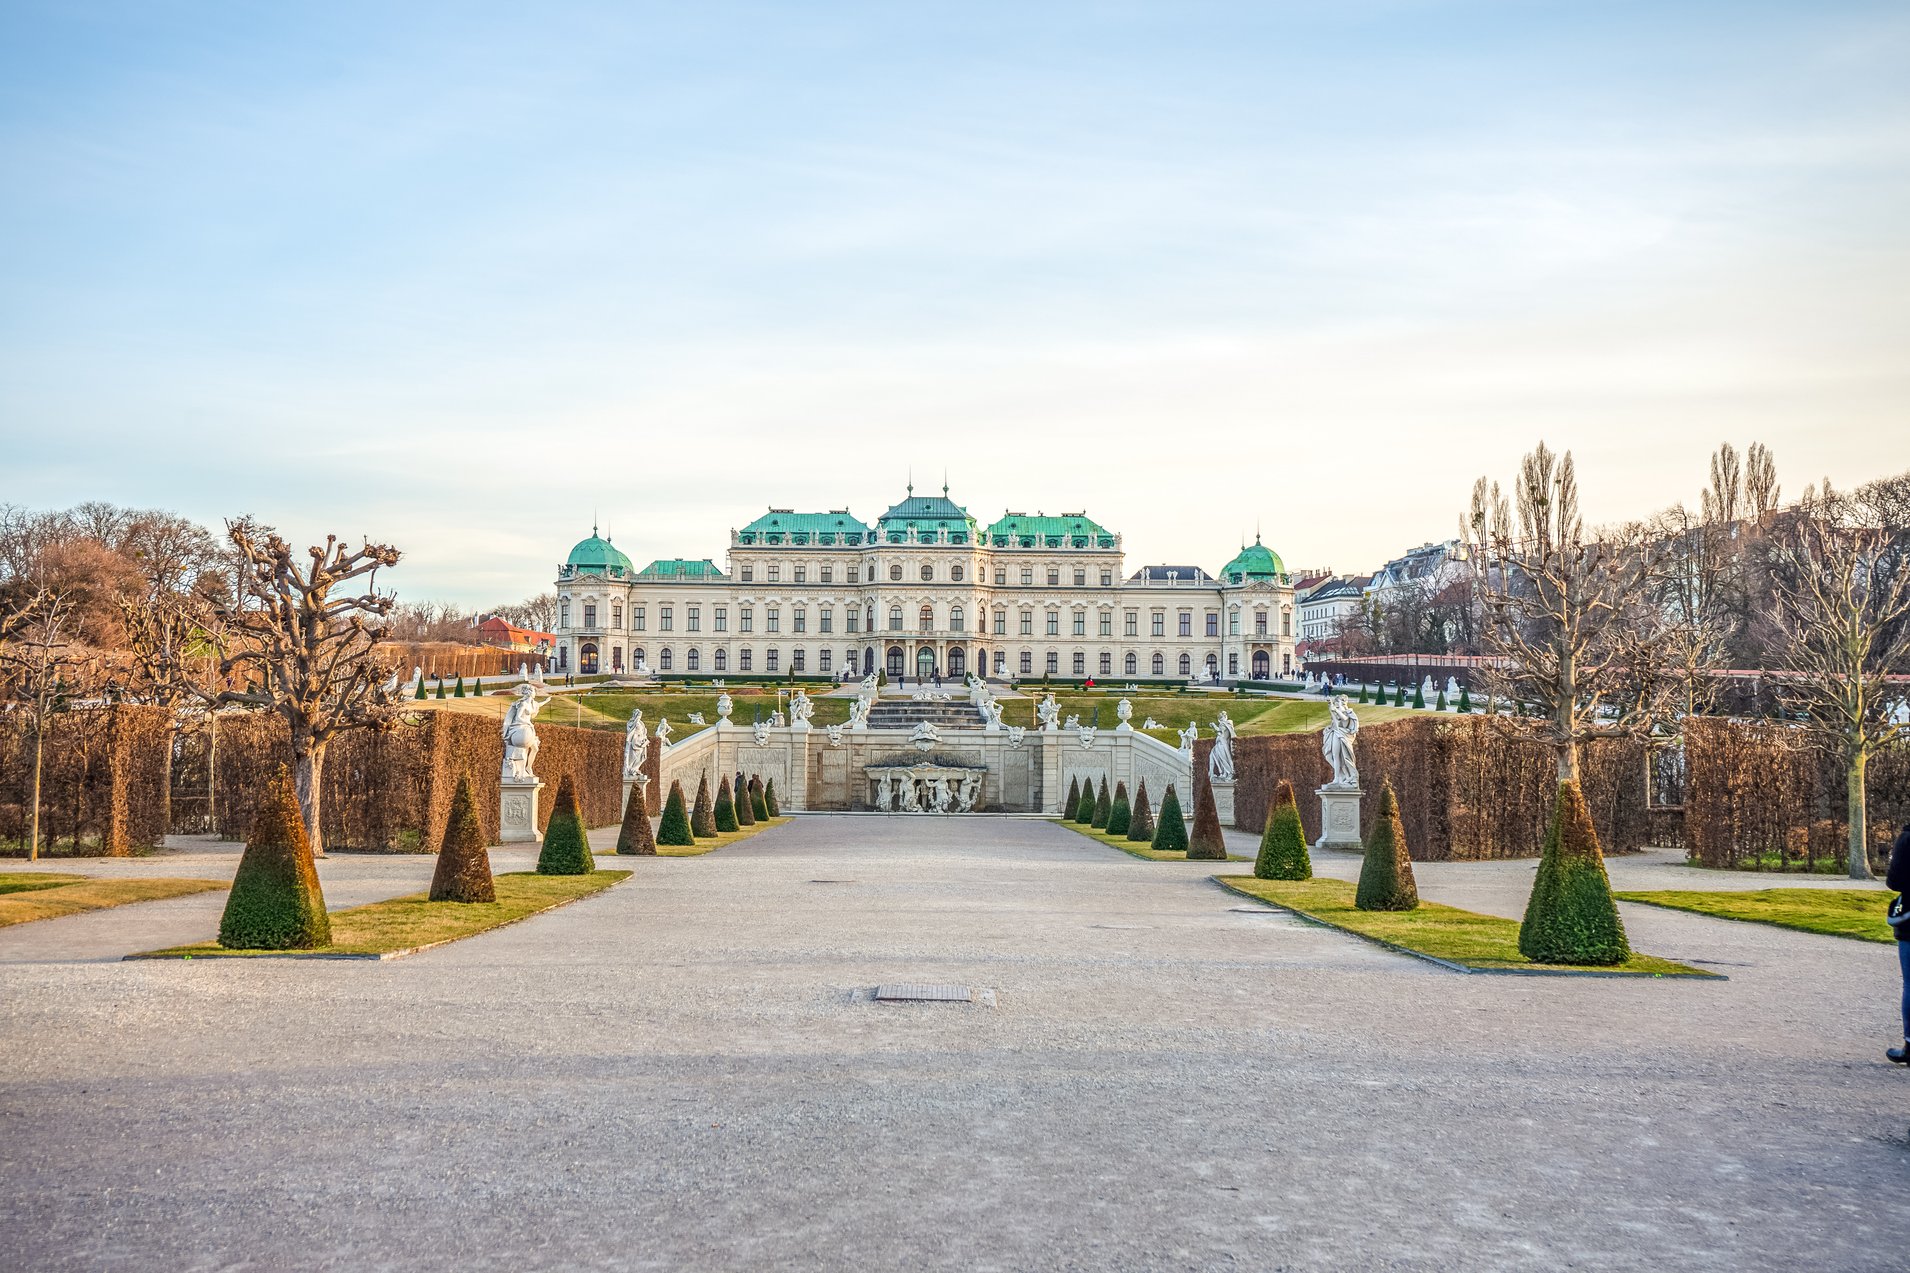 The Belvedere castle in Vienna